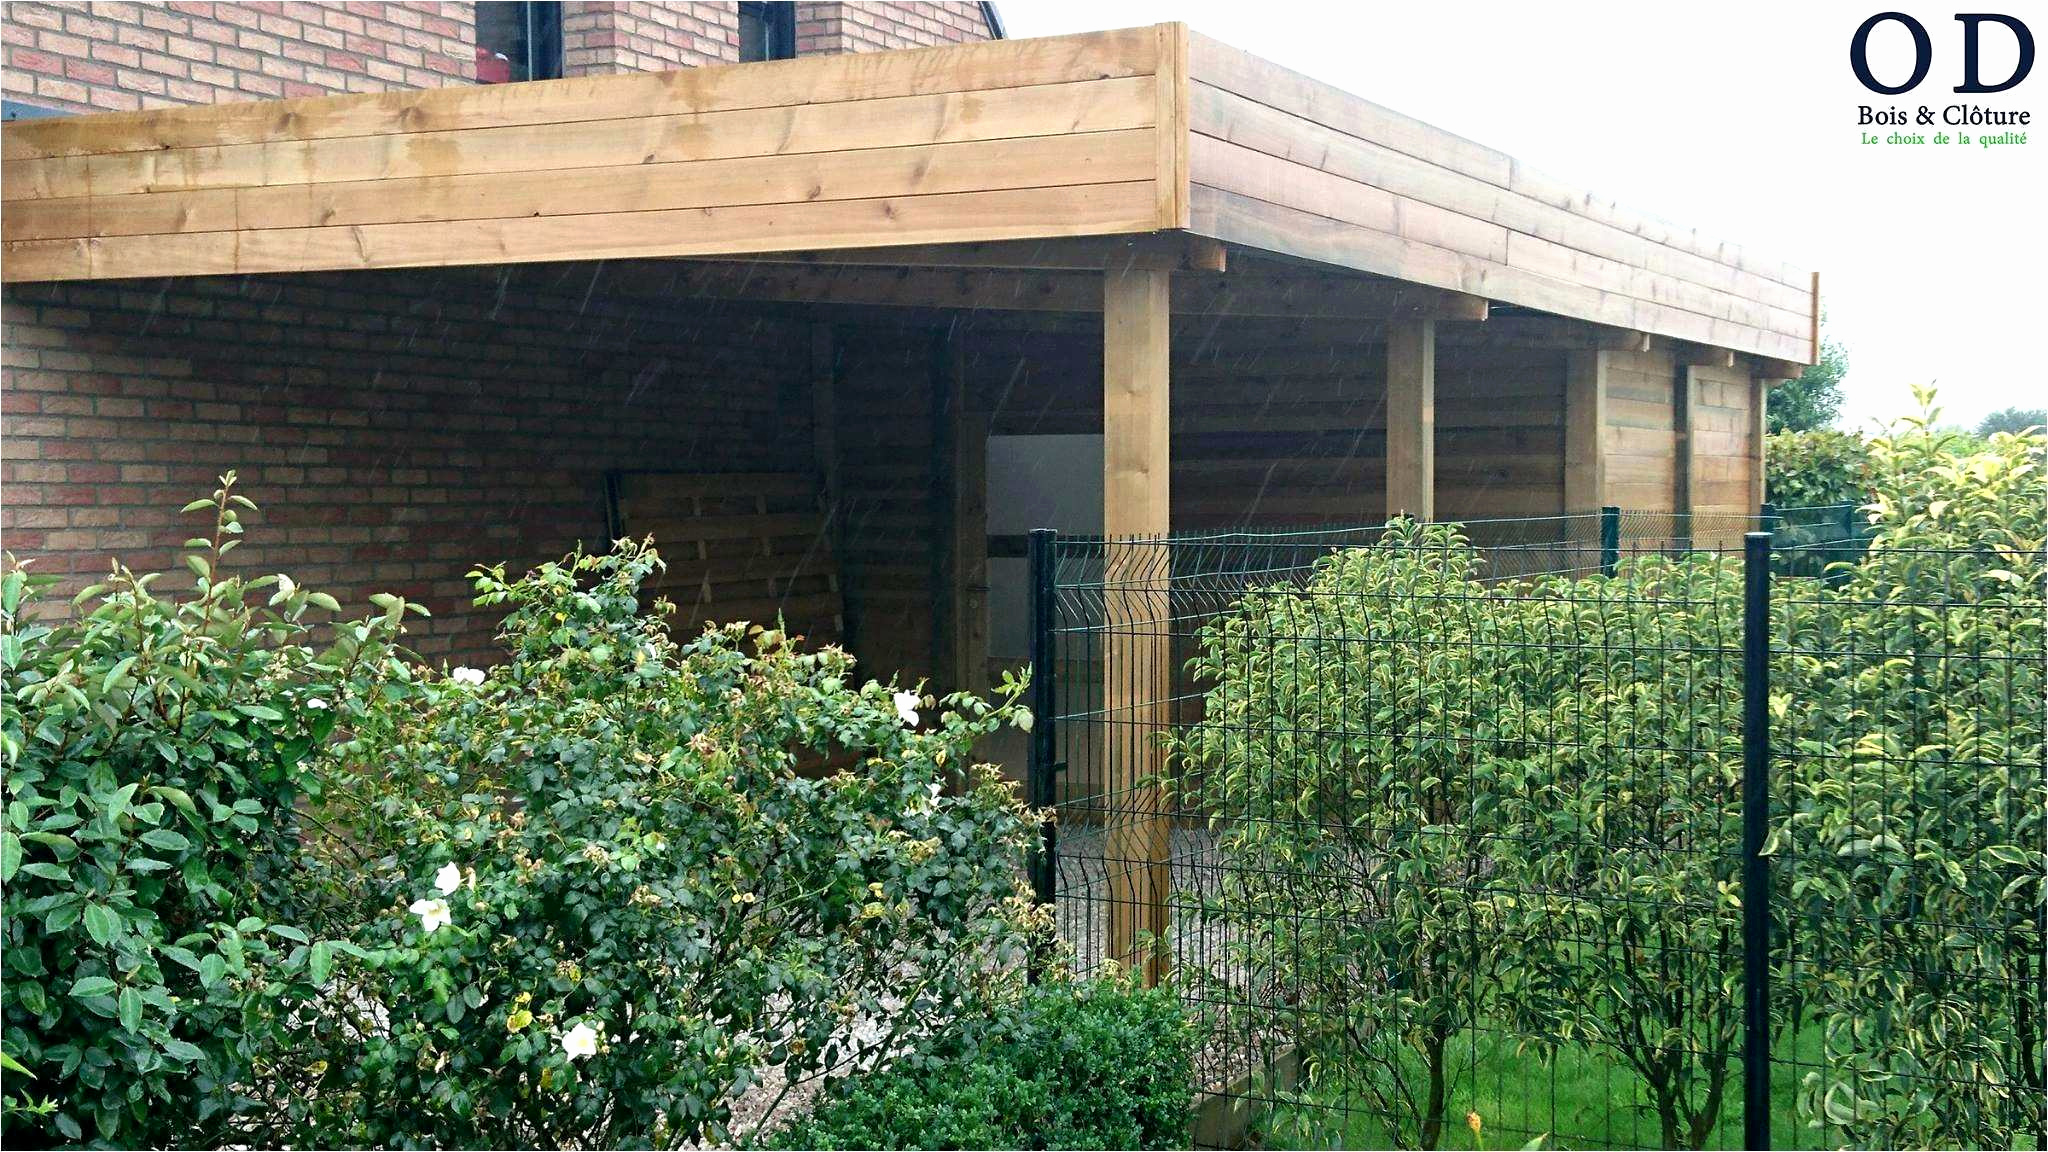 fabriquer un salon de jardin en bois elegant construire abri jardin impressionnant 29 idee installer un abri de of fabriquer un salon de jardin en bois